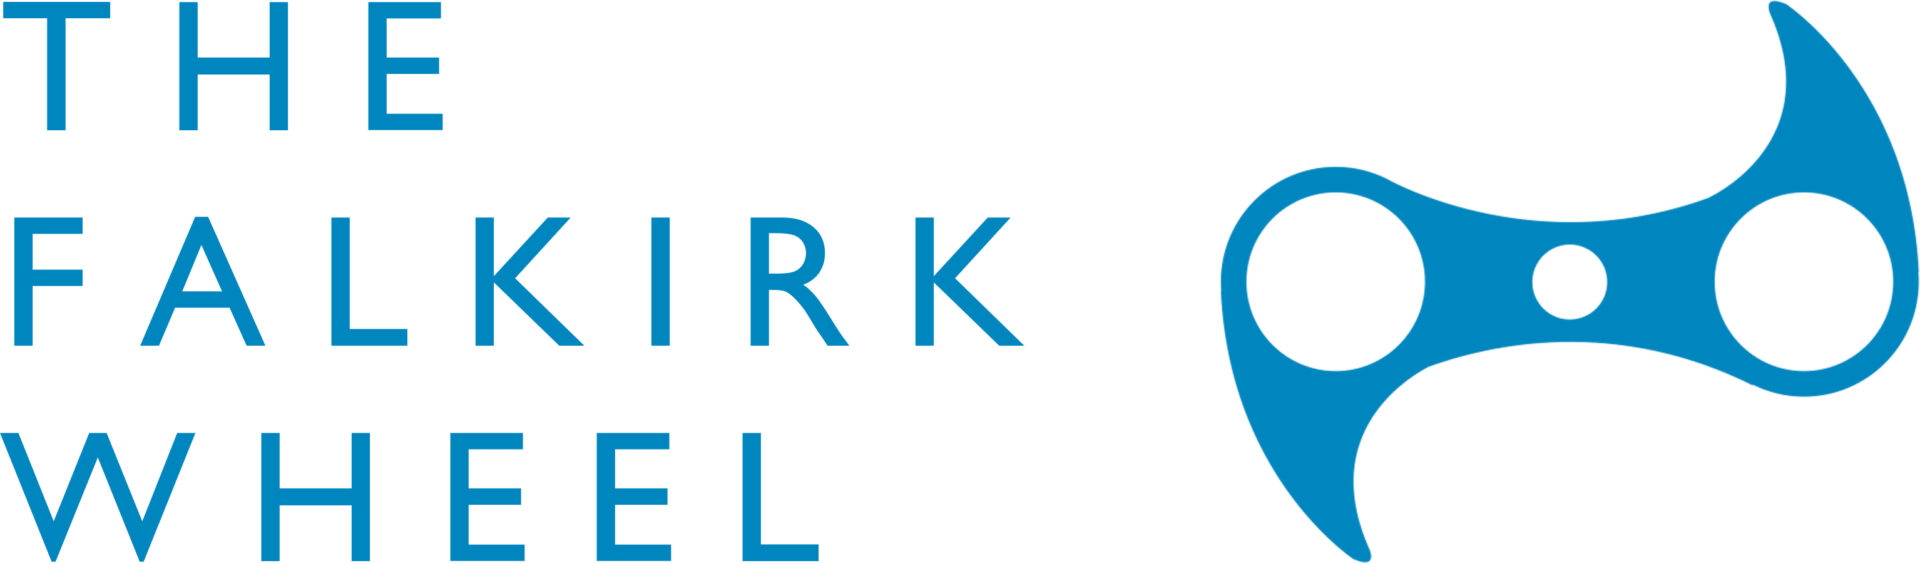 the falkirk wheel logo